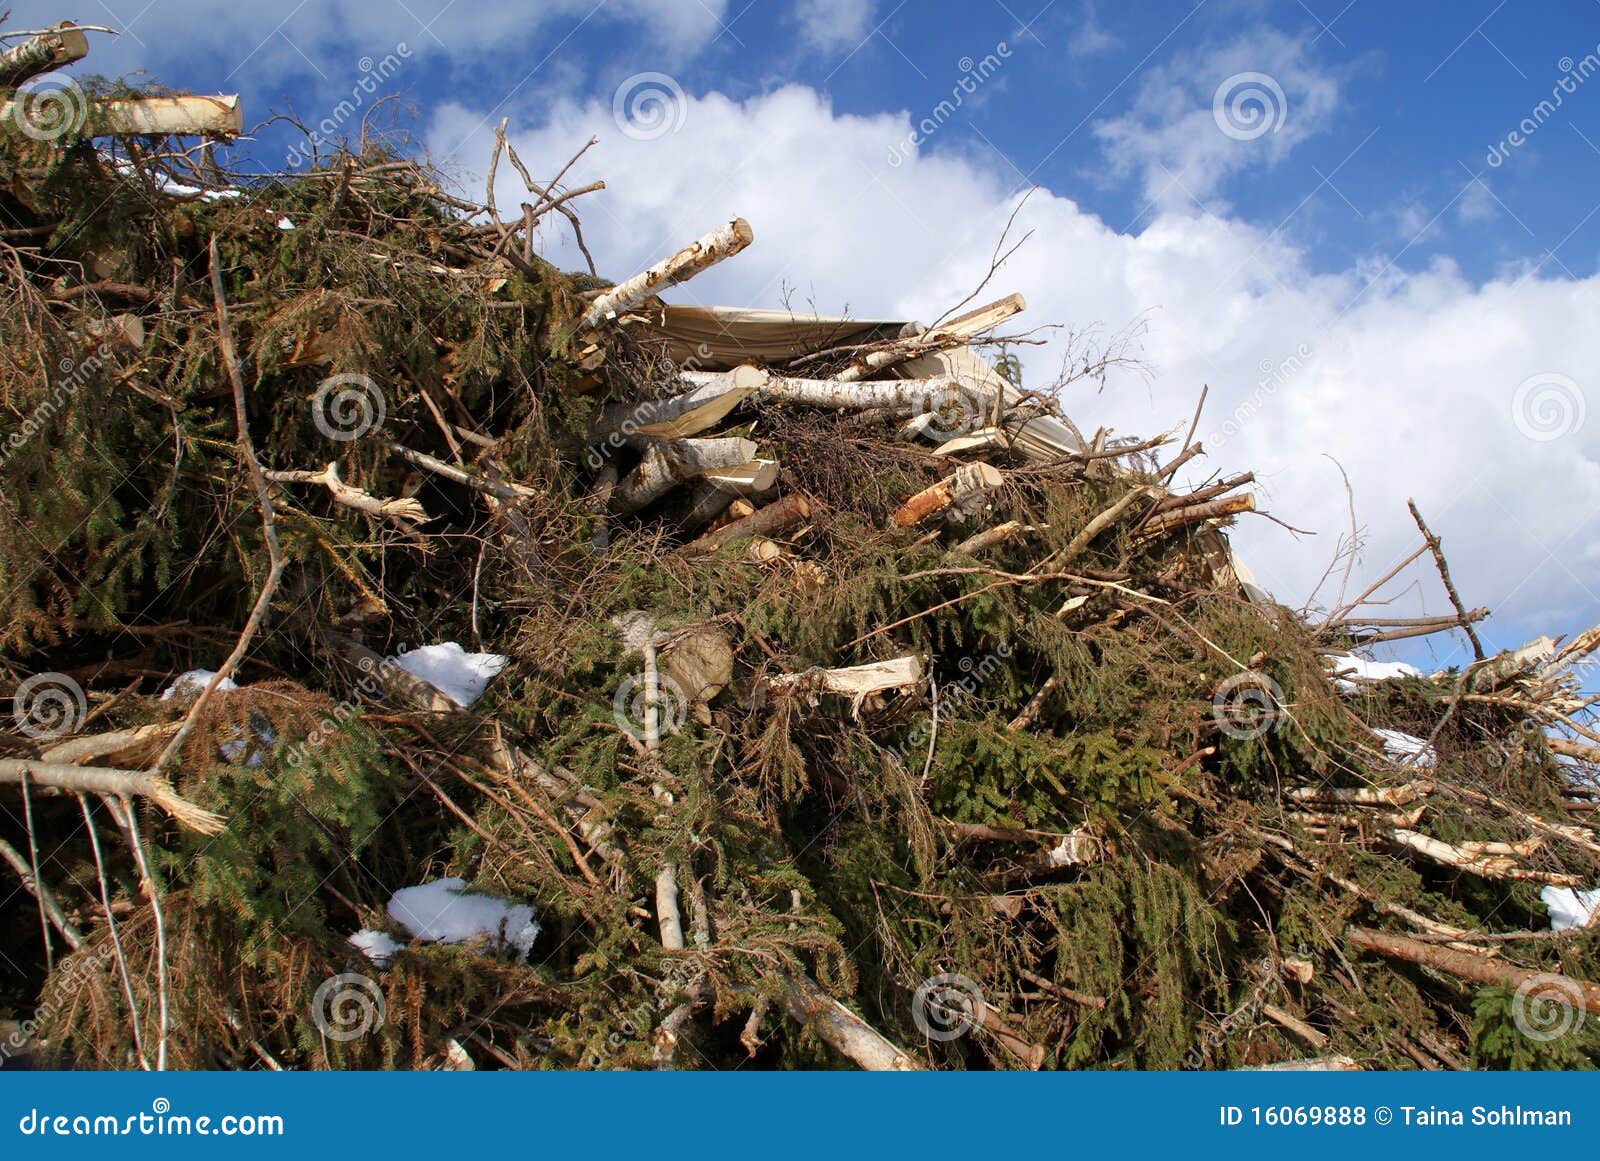 brash wood for biomass